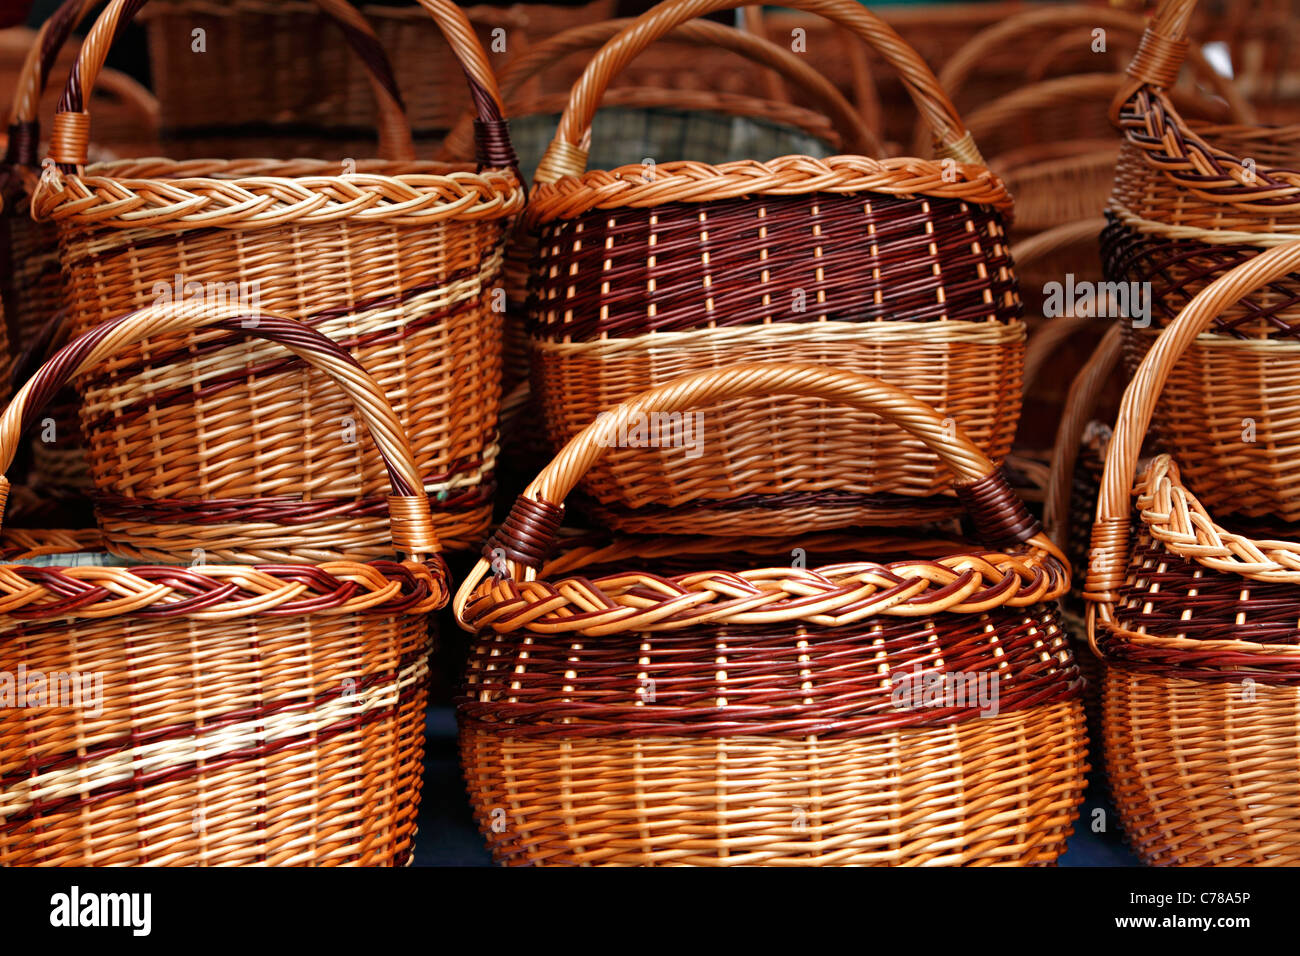 Cane  baskets Stock Photo